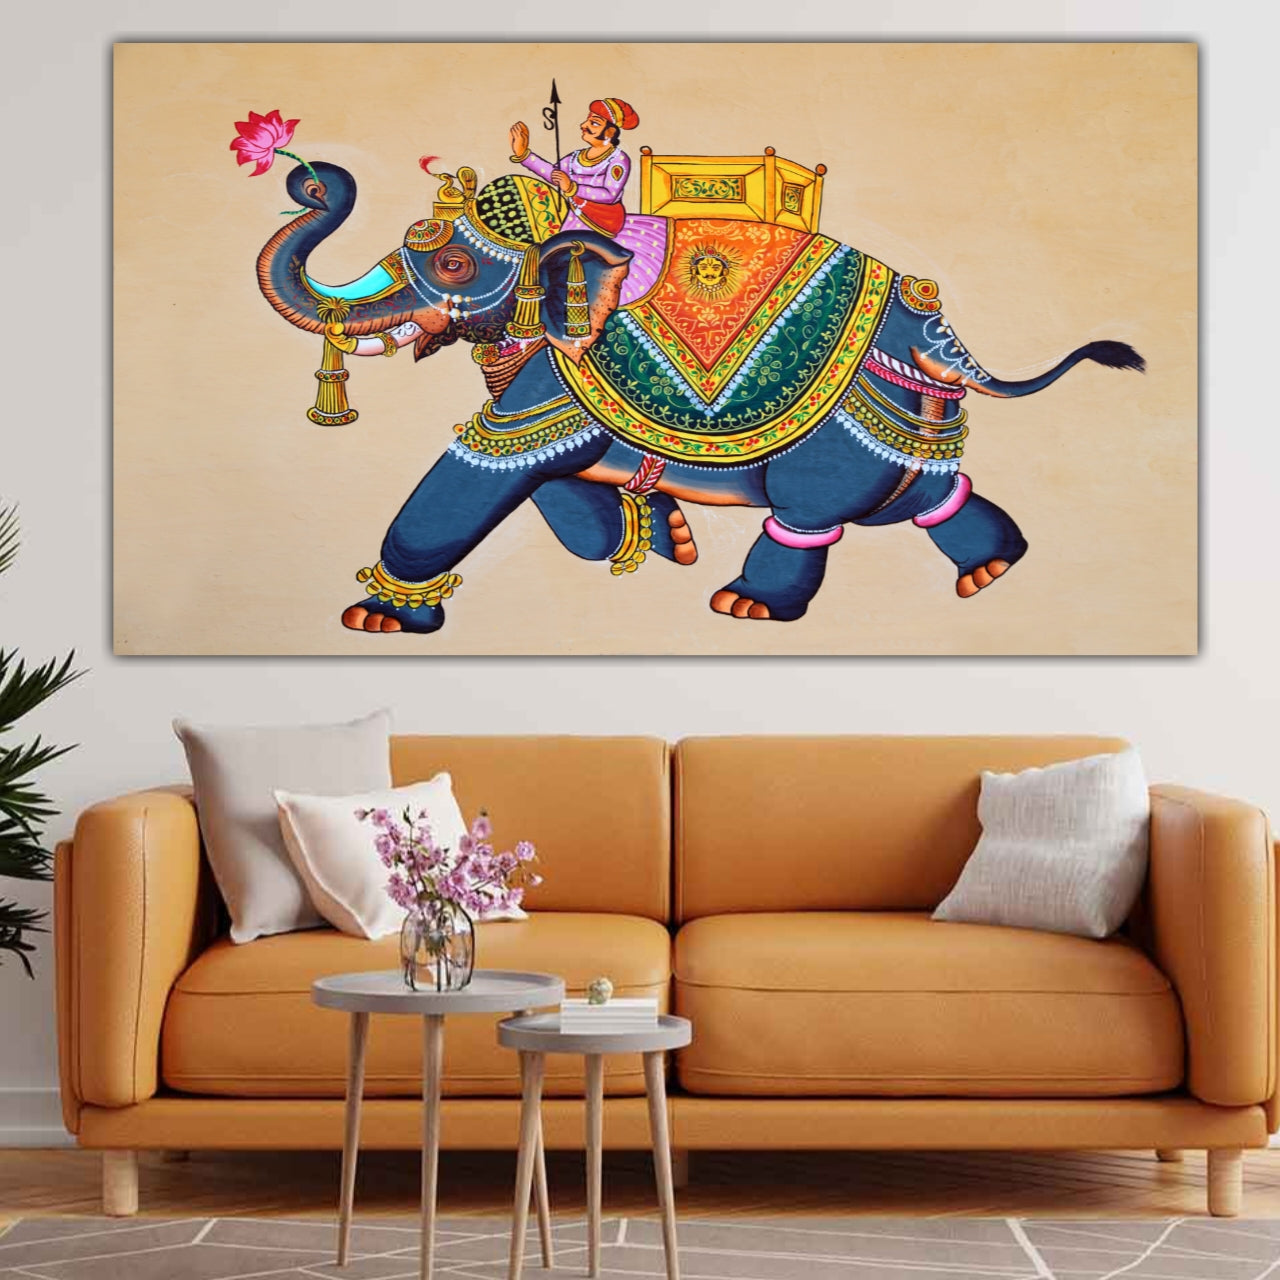 Madhubani Canvas Painting Royal Elephant Wall Painting Frame for Living Room Decoration | Home Decor | Big Size Large Painting